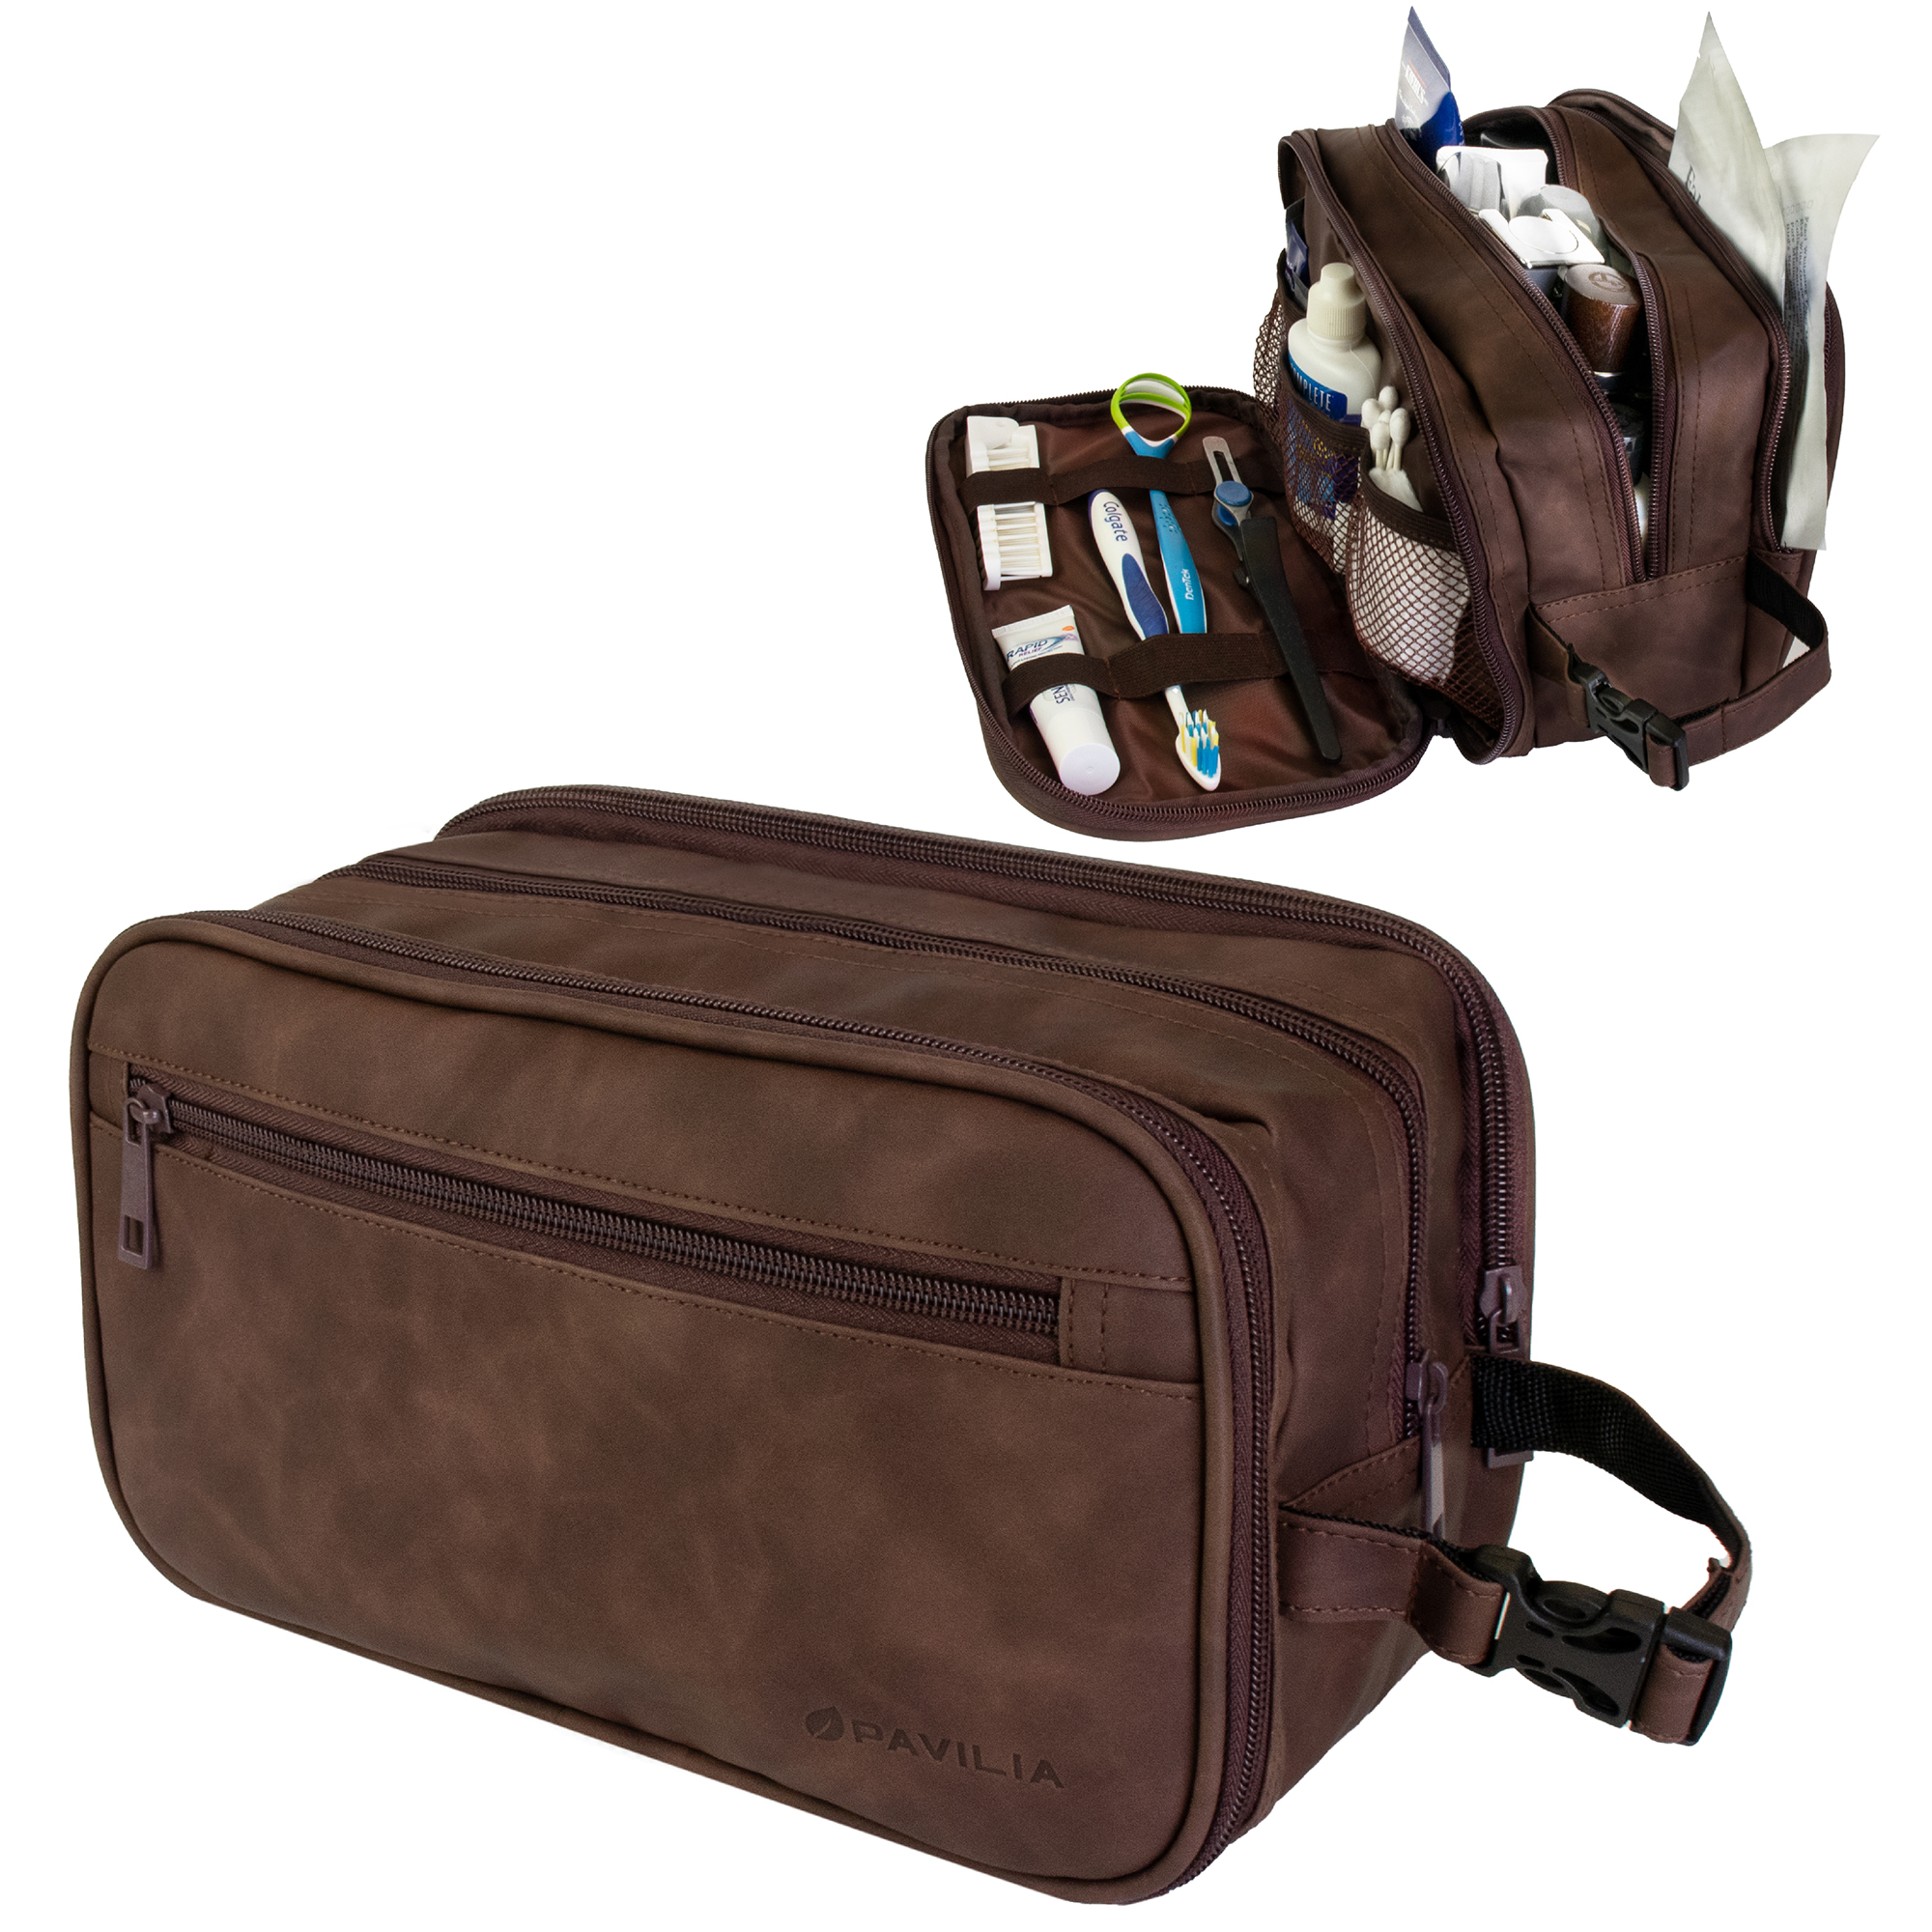 chart meat gambling Mens Toiletry Bag with Zipper PU Leather Case Organizer Portable Travel  Dopp Kit | eBay